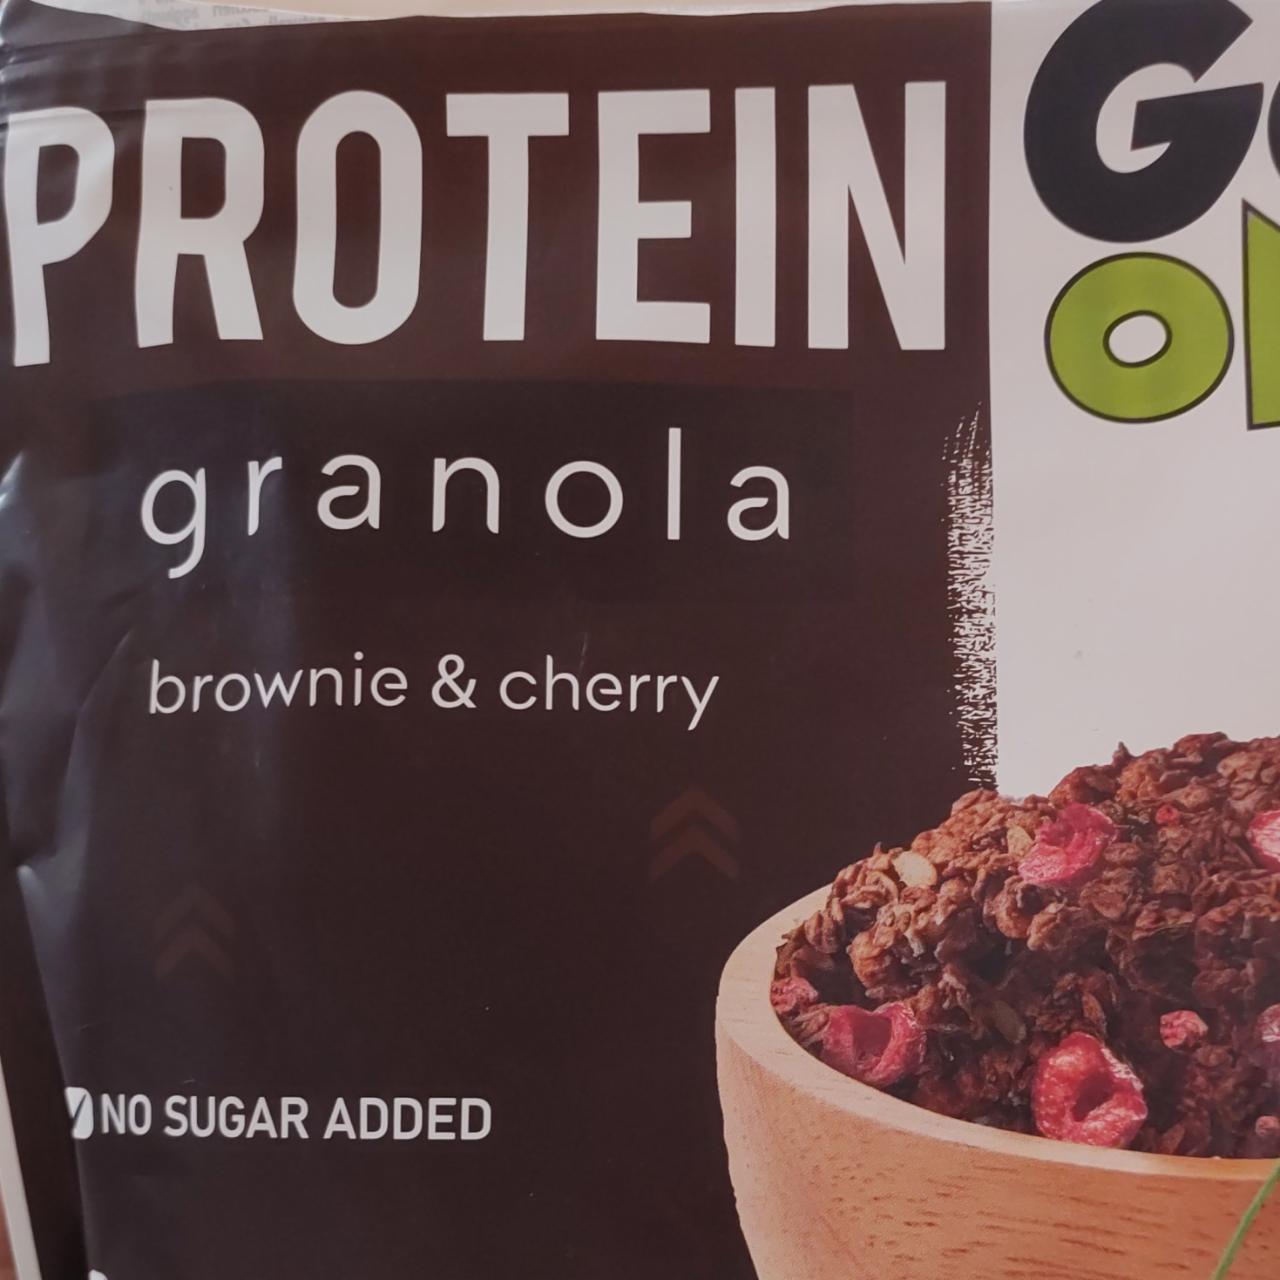 Fotografie - Protein Granola Brownie & cherry Go On!